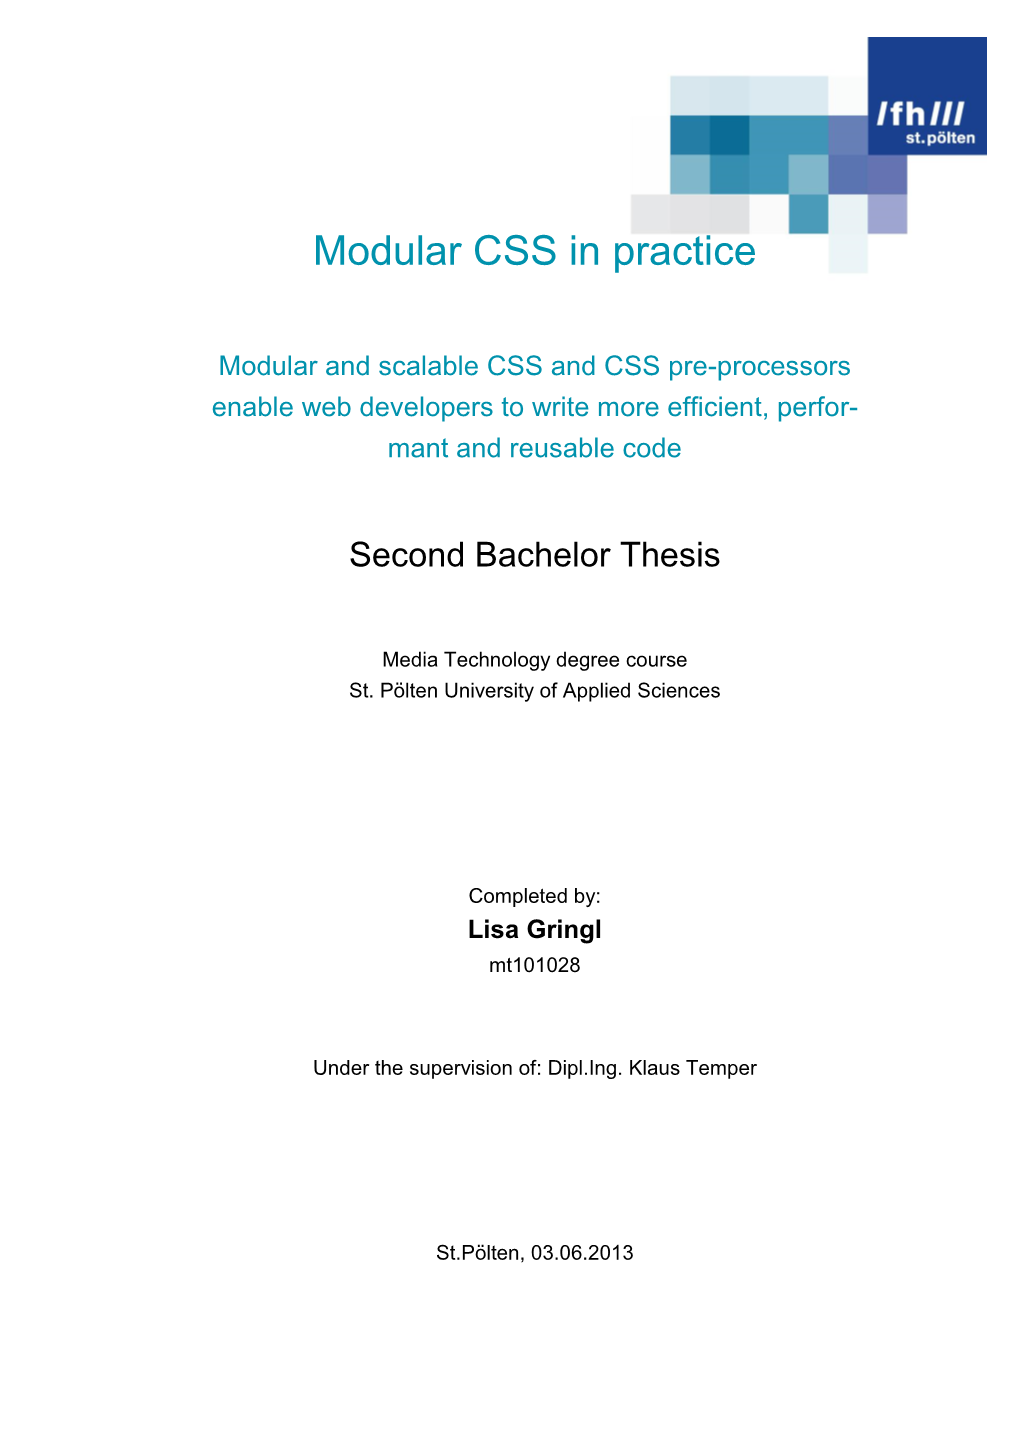 Modular CSS in Practice